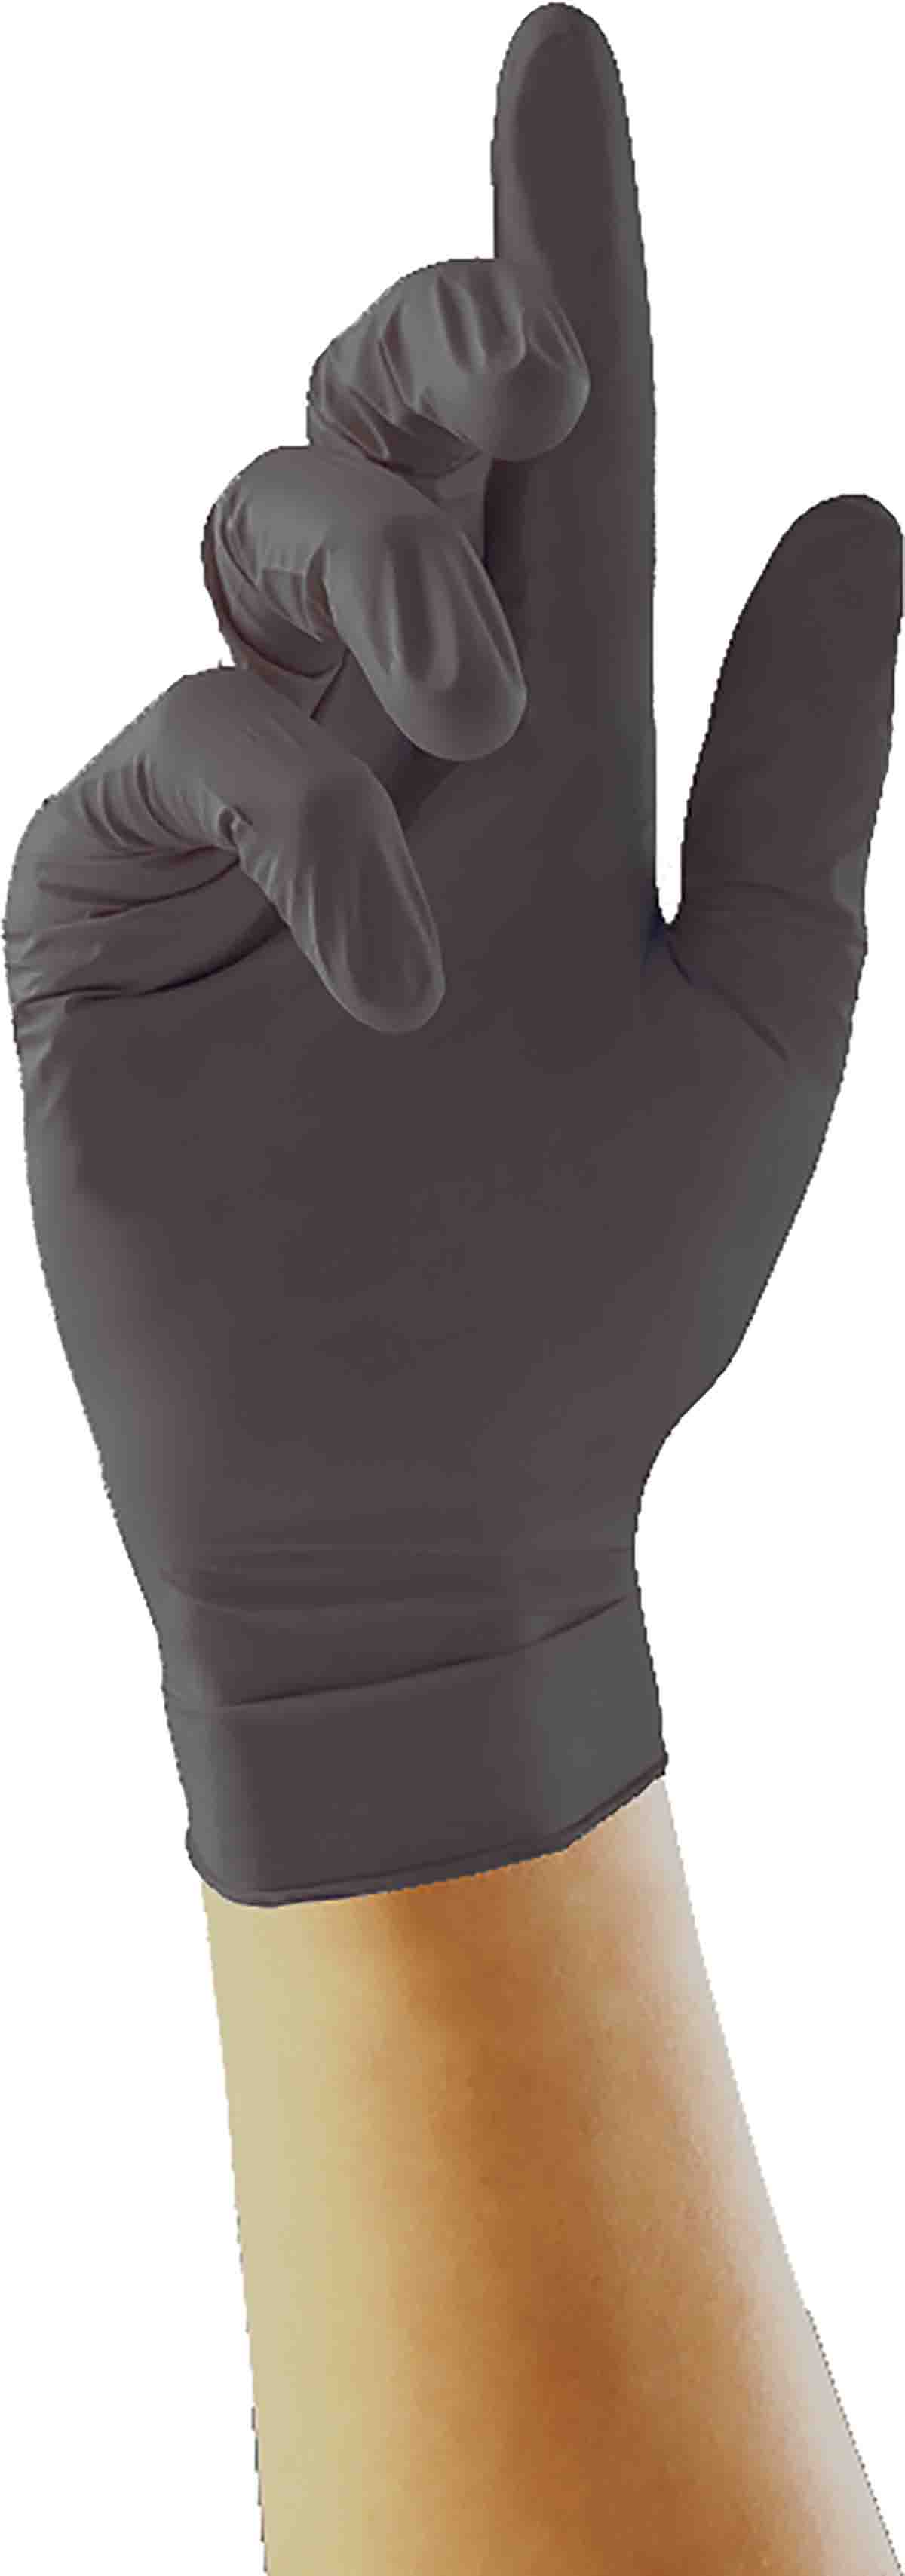 Uniglove Pearl Black Powder-Free Nitrile Disposable Gloves, Size 10, XL, Food Safe, 100 per Pack